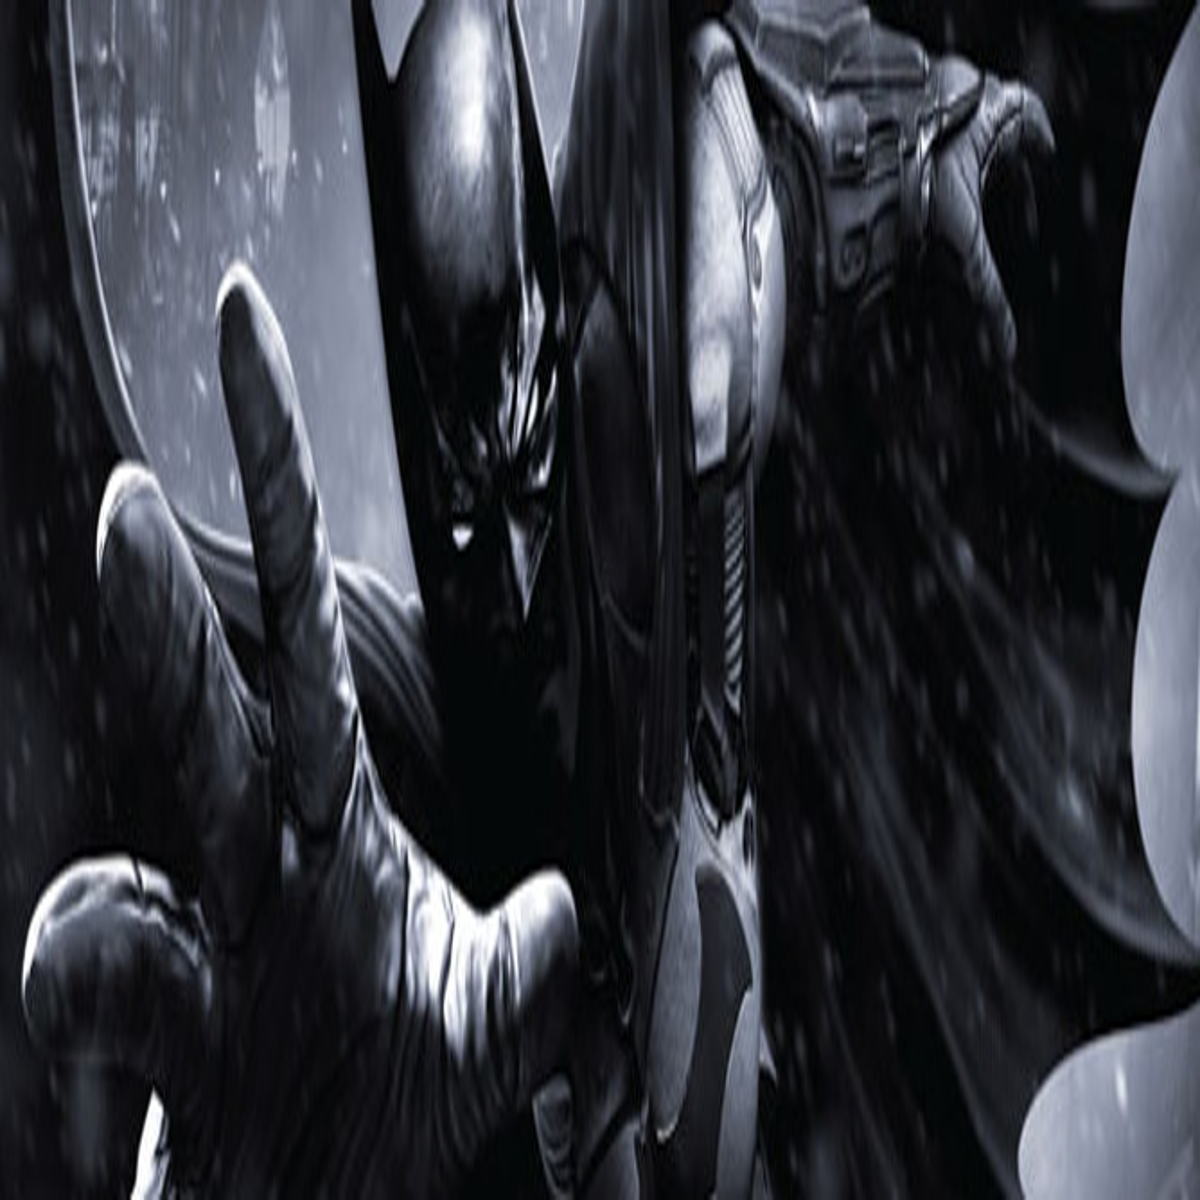 Batman, Deathstroke Black Mask from Arkham Origins Wallpaper